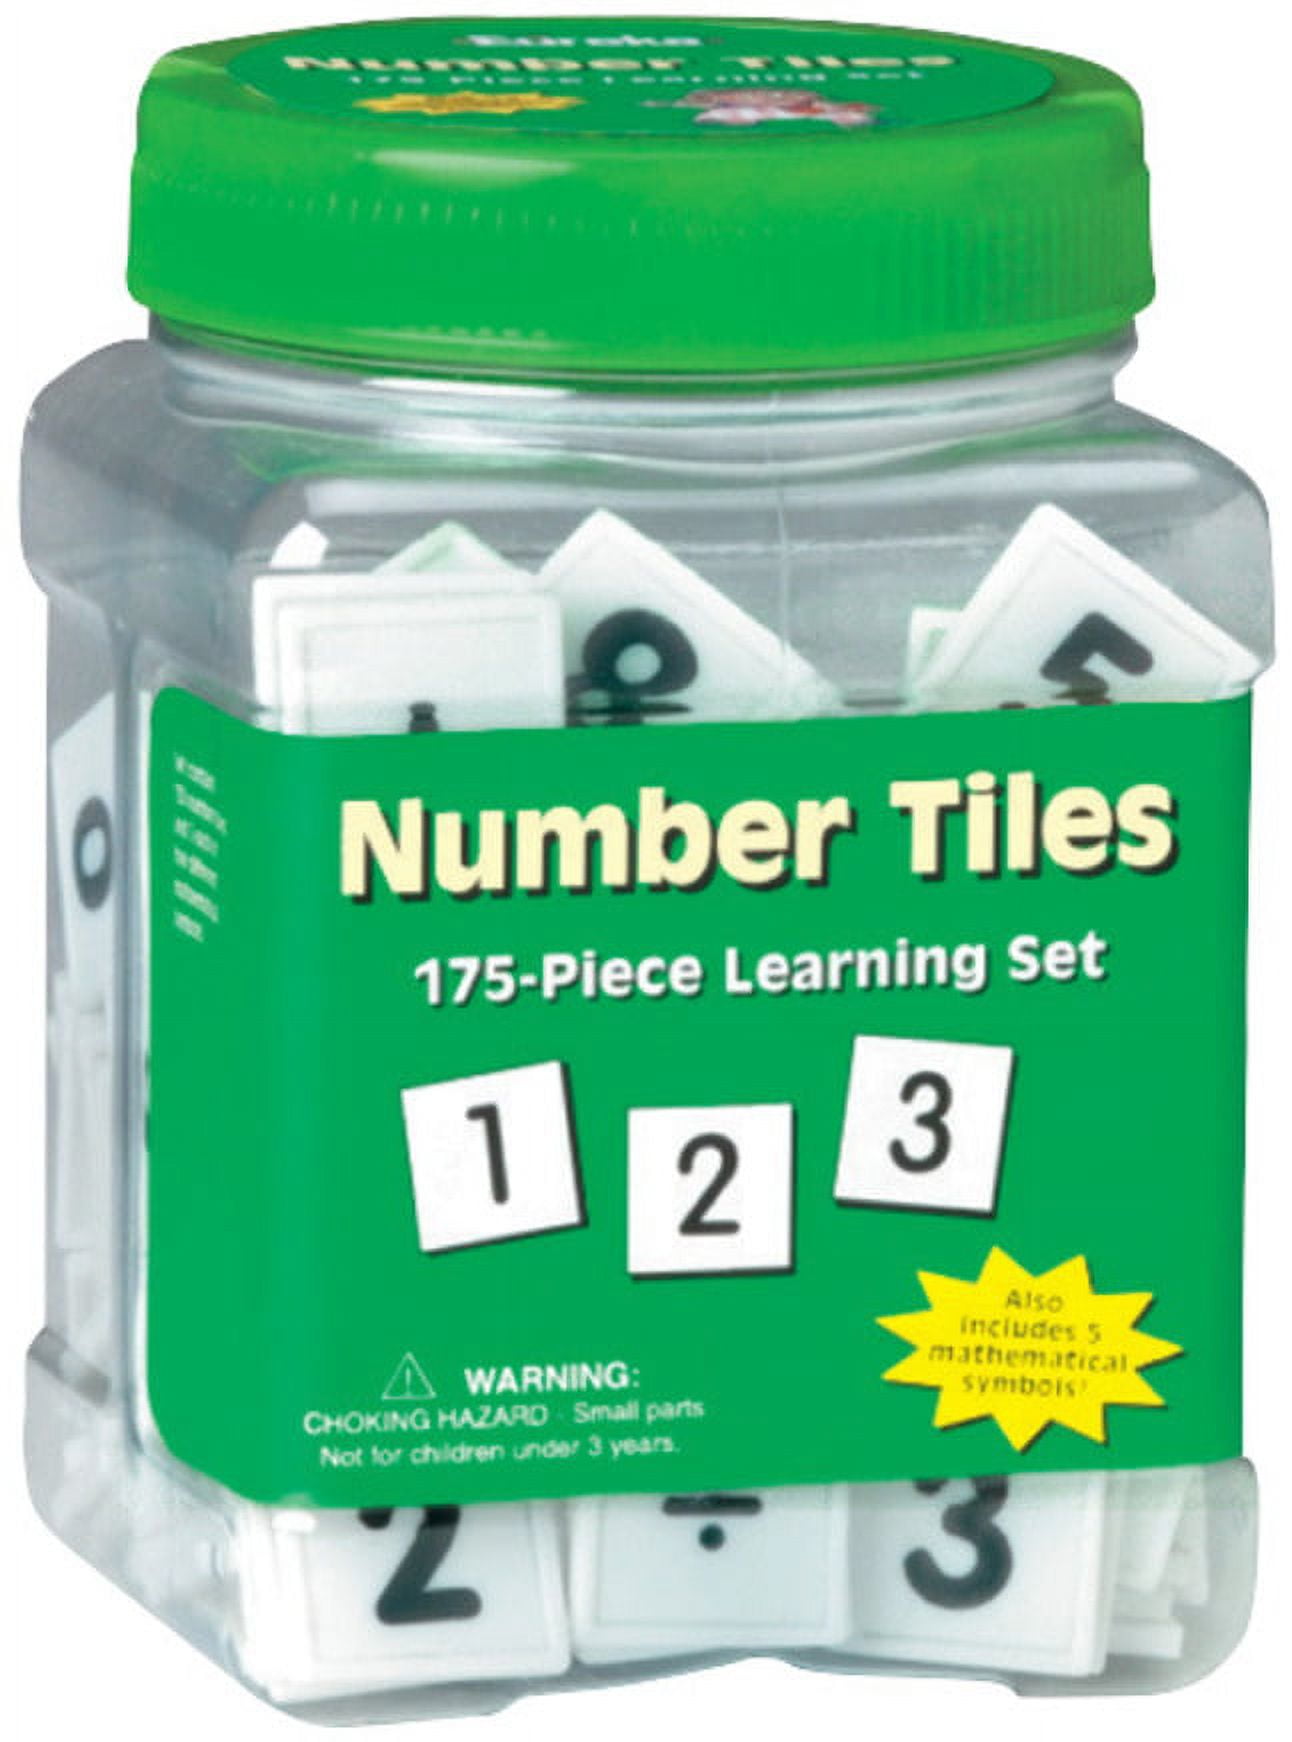 Eureka Number Tiles Learning Set, 175 Pieces